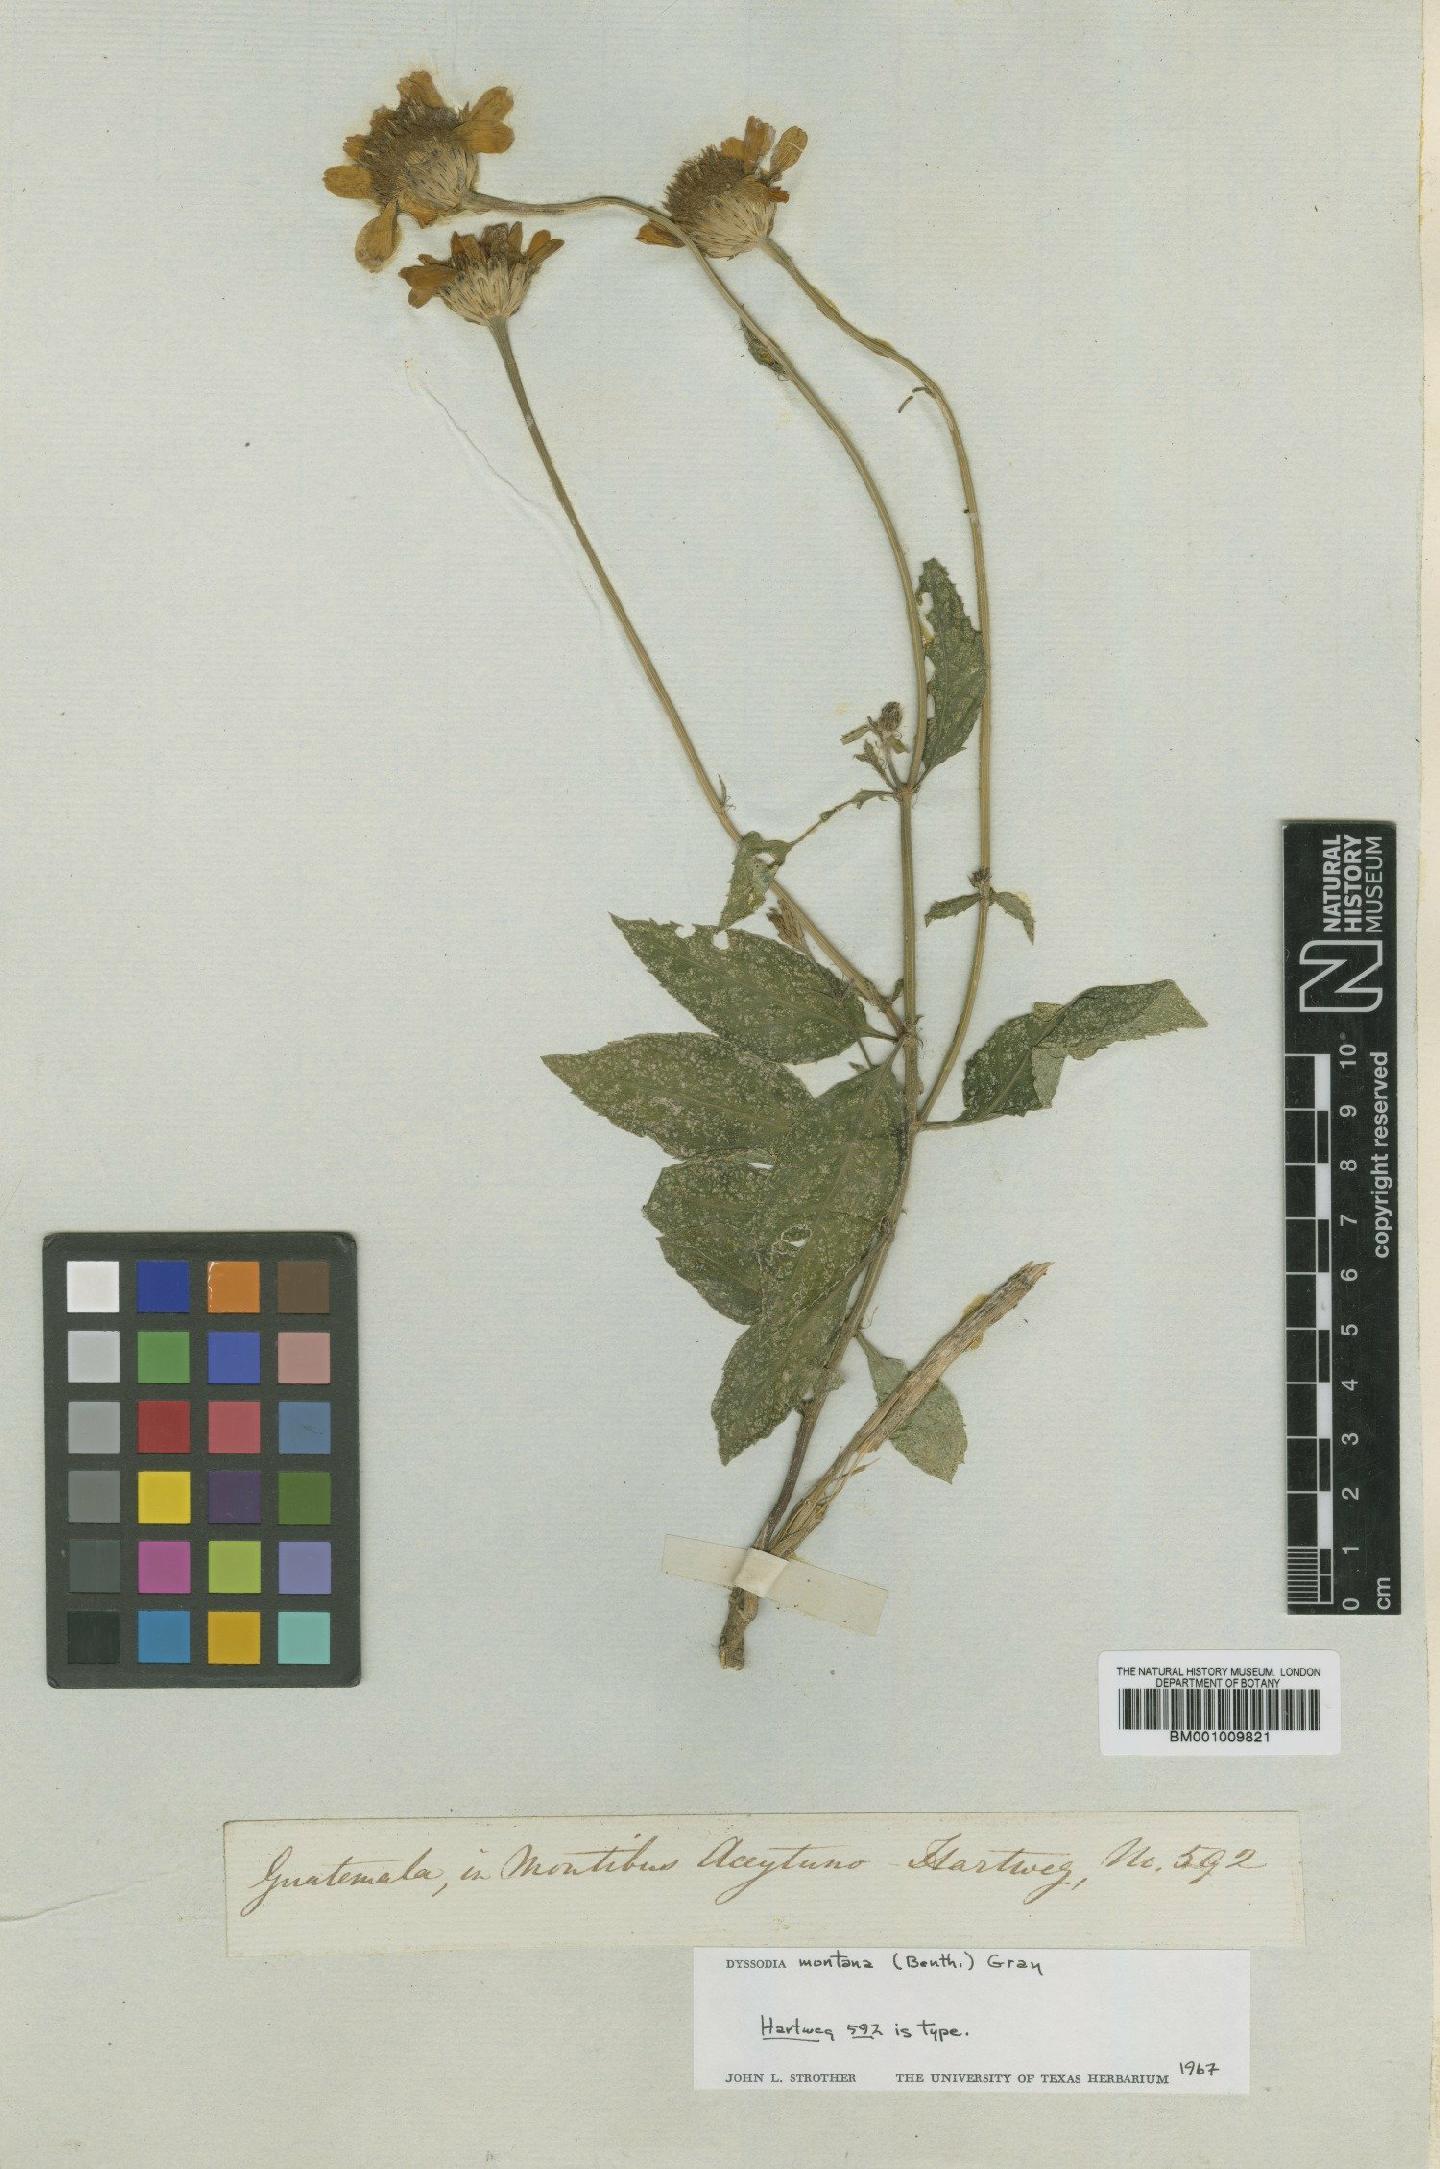 To NHMUK collection (Dyssodia montana (Benth.) A.Gray; Type; NHMUK:ecatalogue:622296)